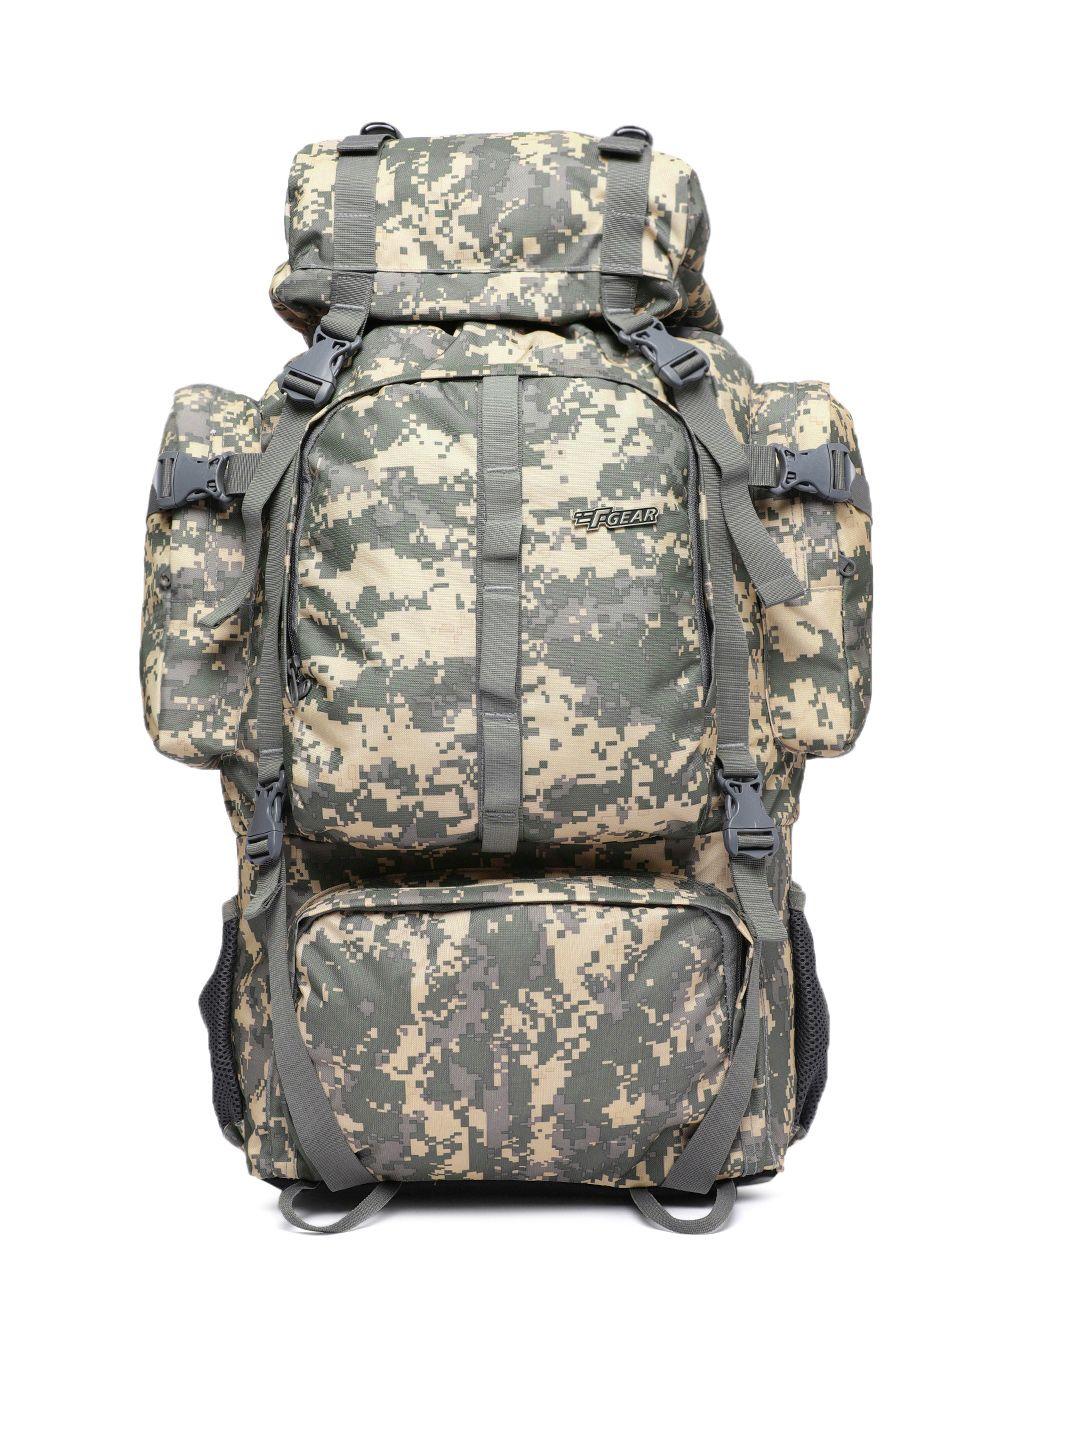 f gear unisex green & beige printed military neutron marpat acv rucksacks